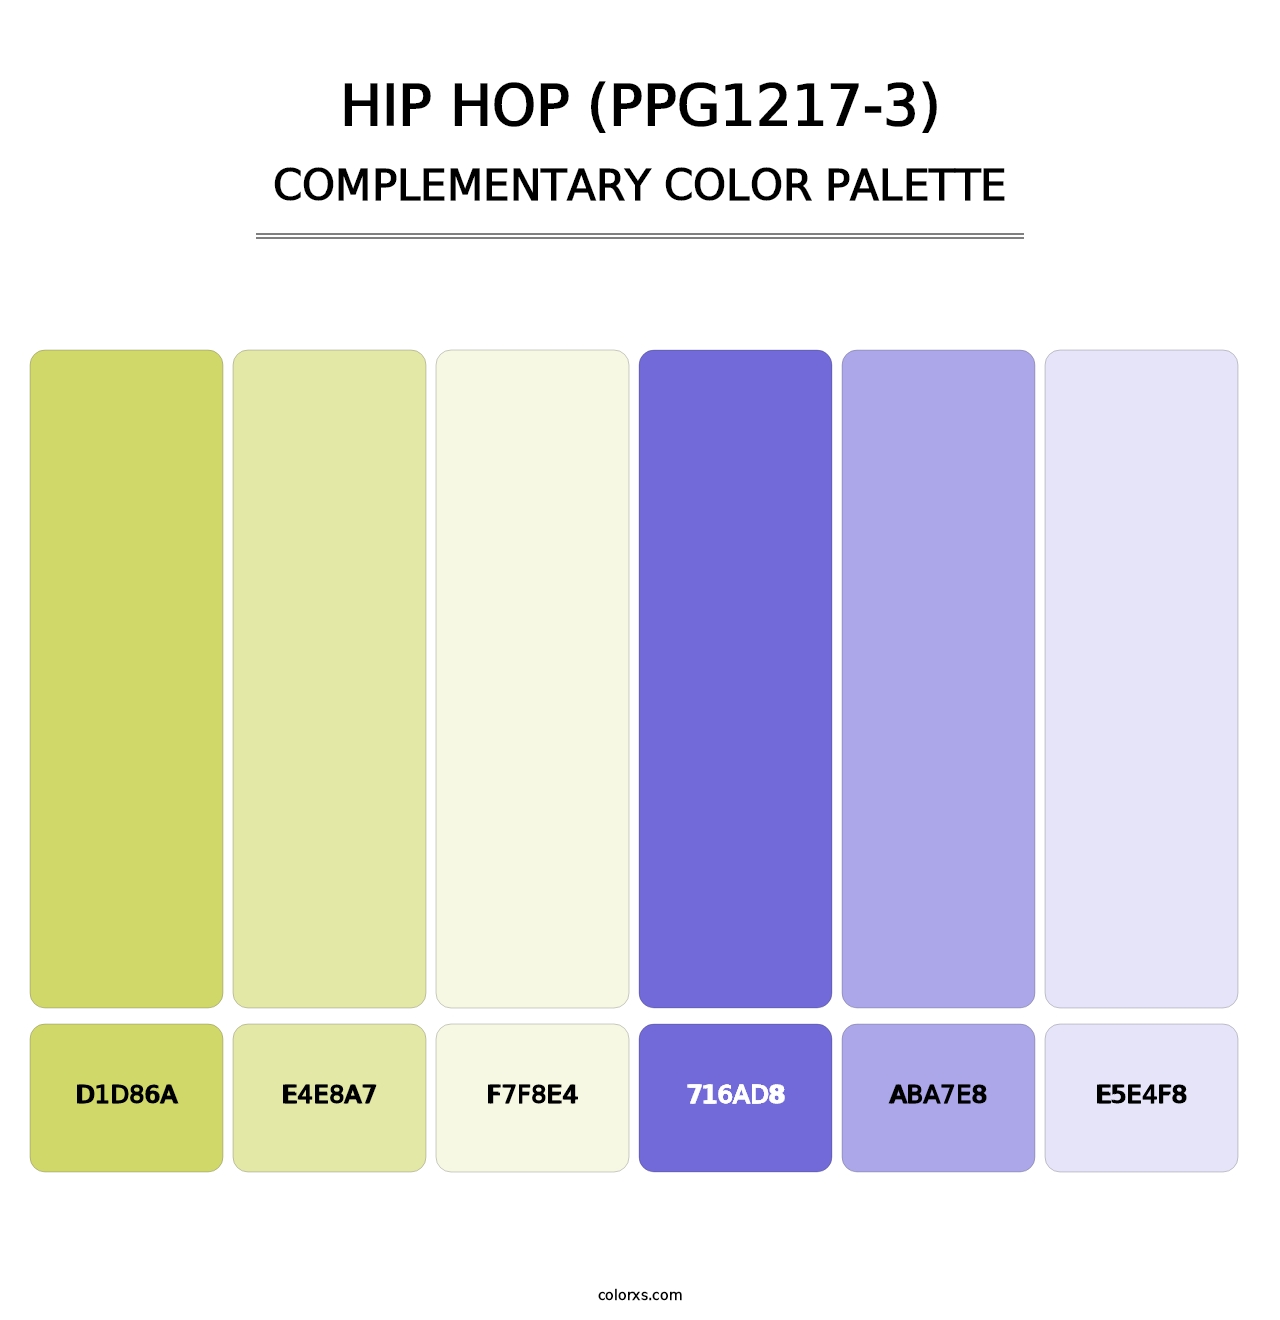 Hip Hop (PPG1217-3) - Complementary Color Palette